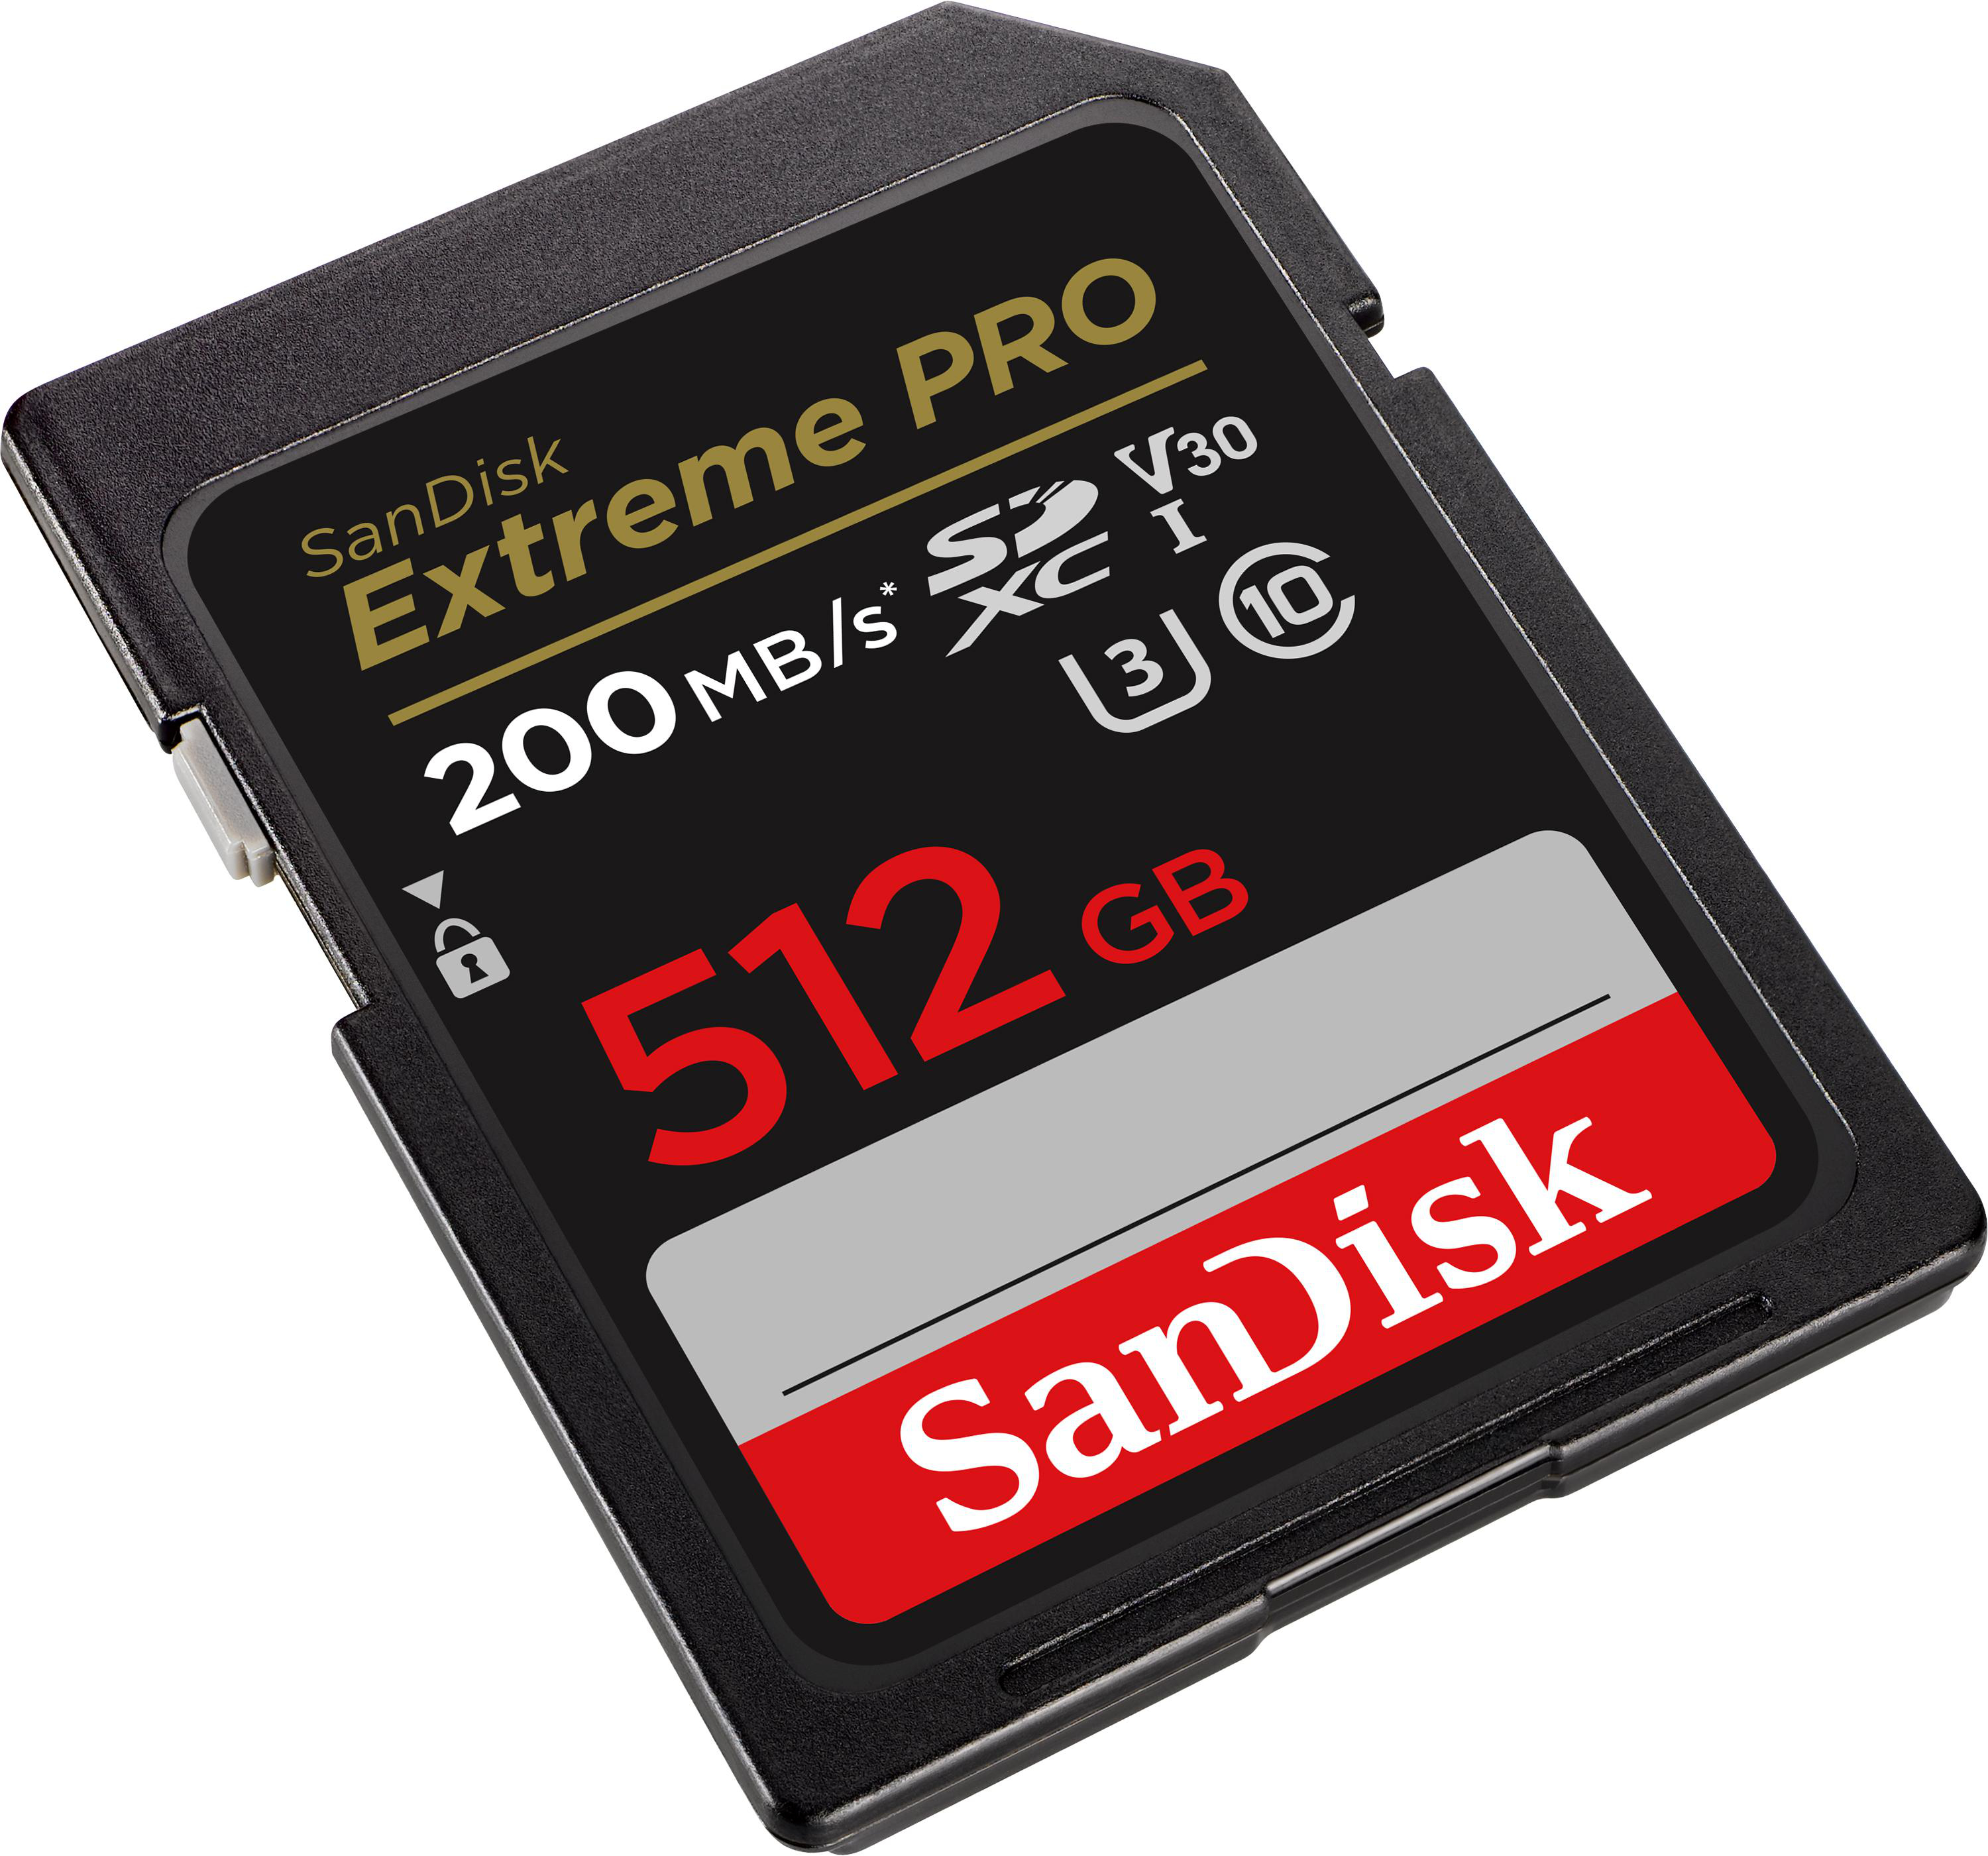 SANDISK Extreme PRO® 200 512 GB, MB/s Speicherkarte, SDXC UHS-I